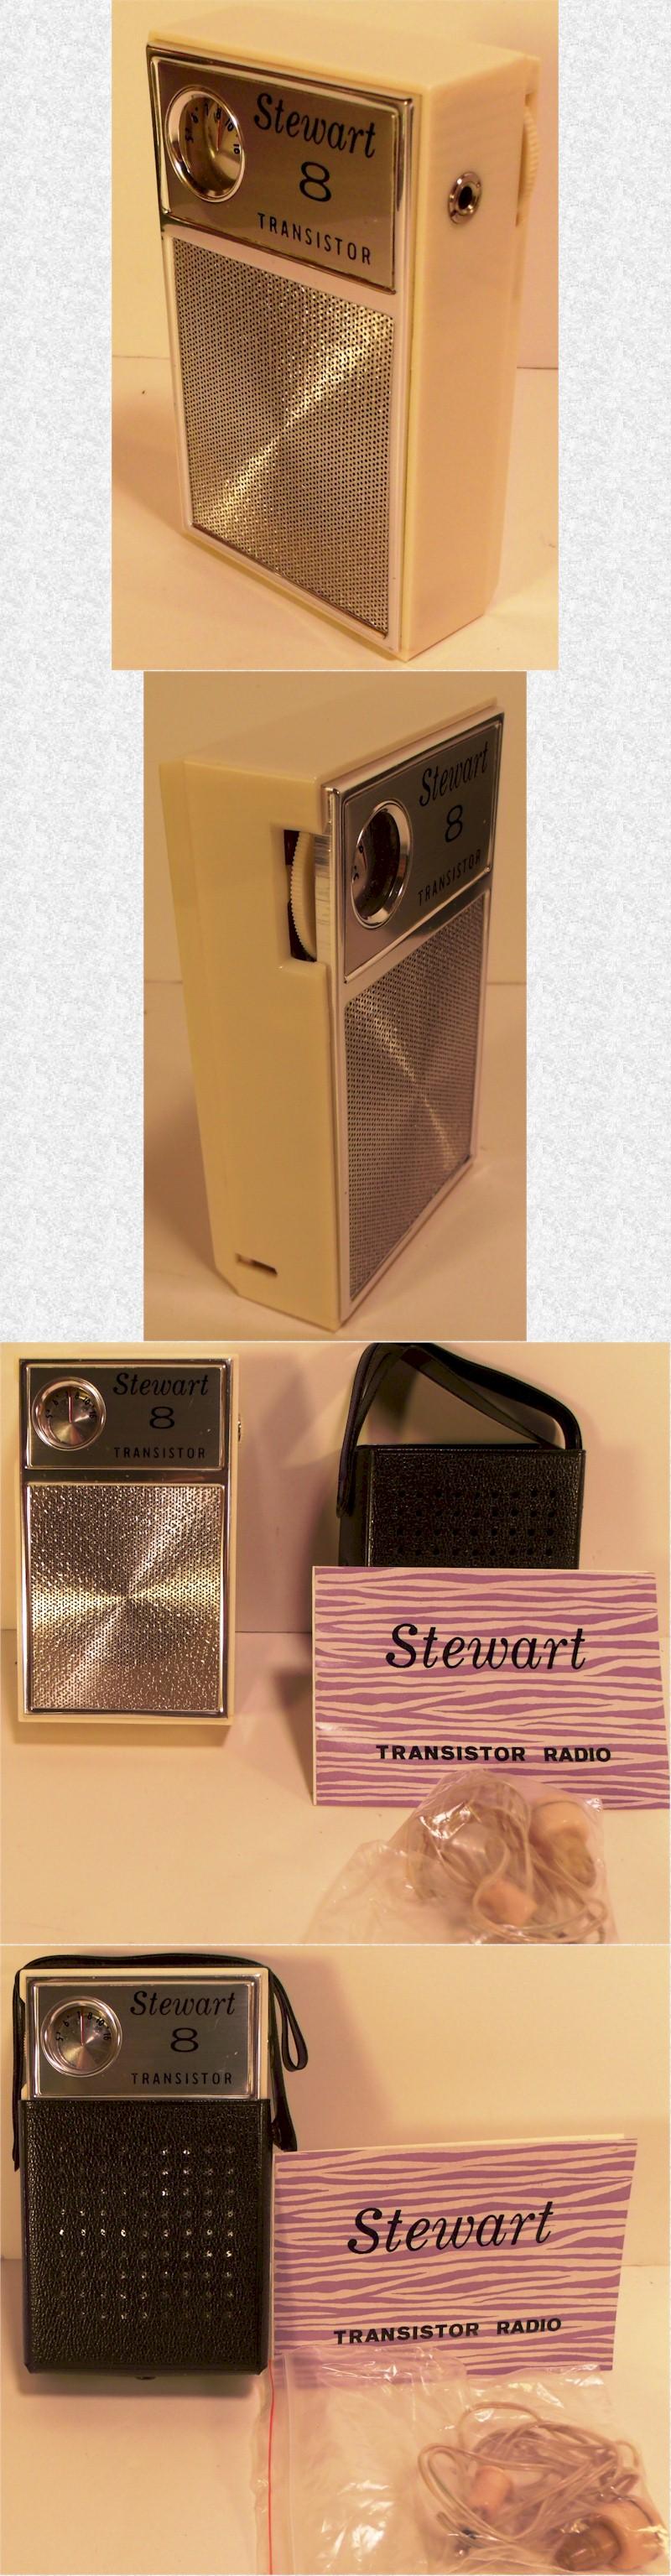 Stewart 866 Pocket Transistor (1960s)